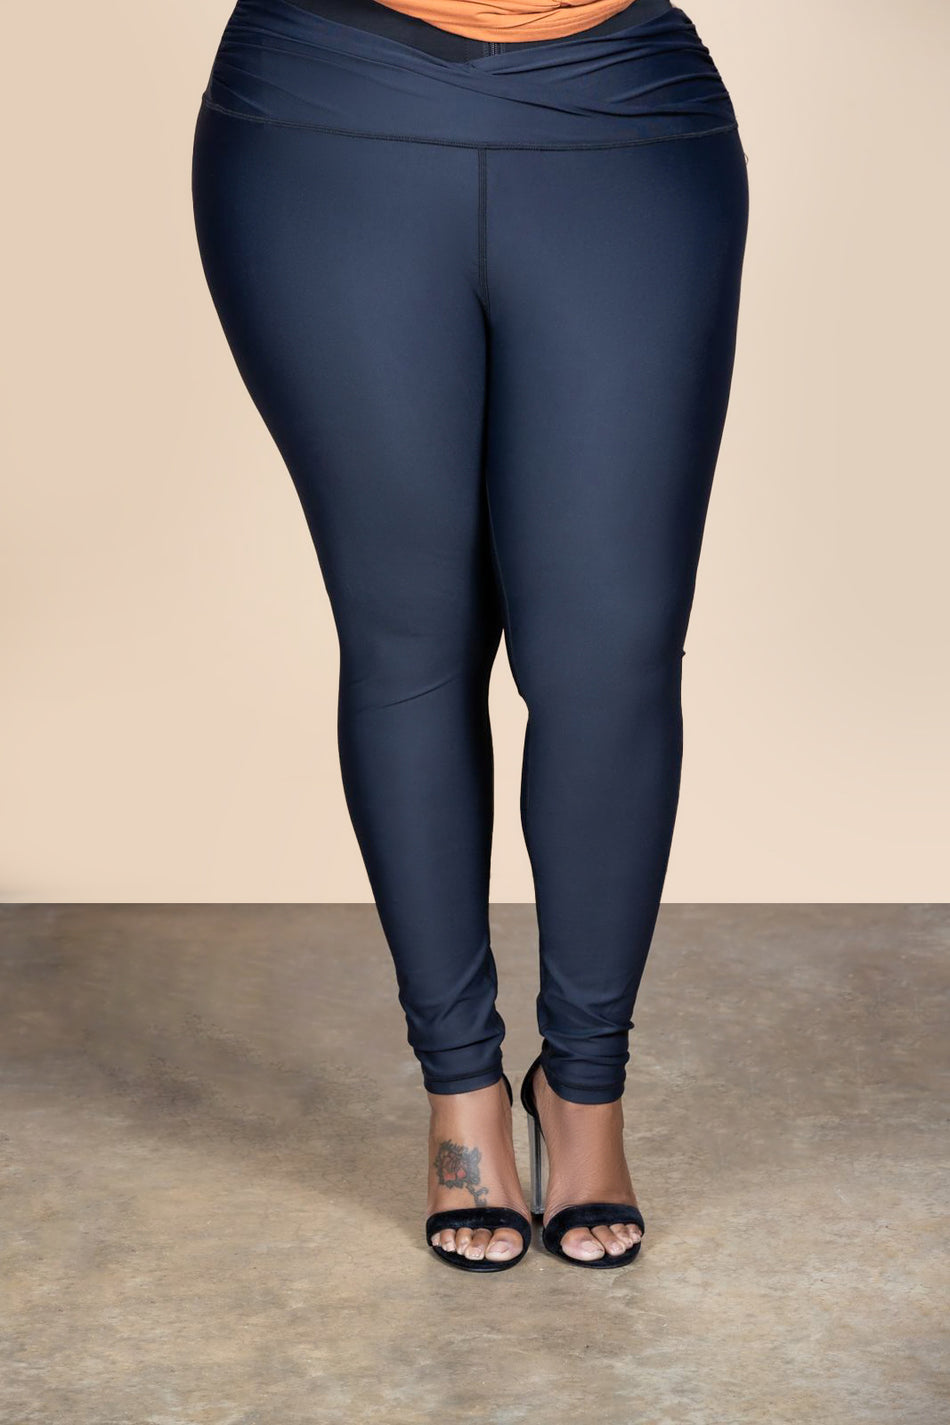 Tamela Mann Collection Women's High Waist Active Leggings - Plus Size  Athleisure Wear (22/24, Olive) : : Fashion